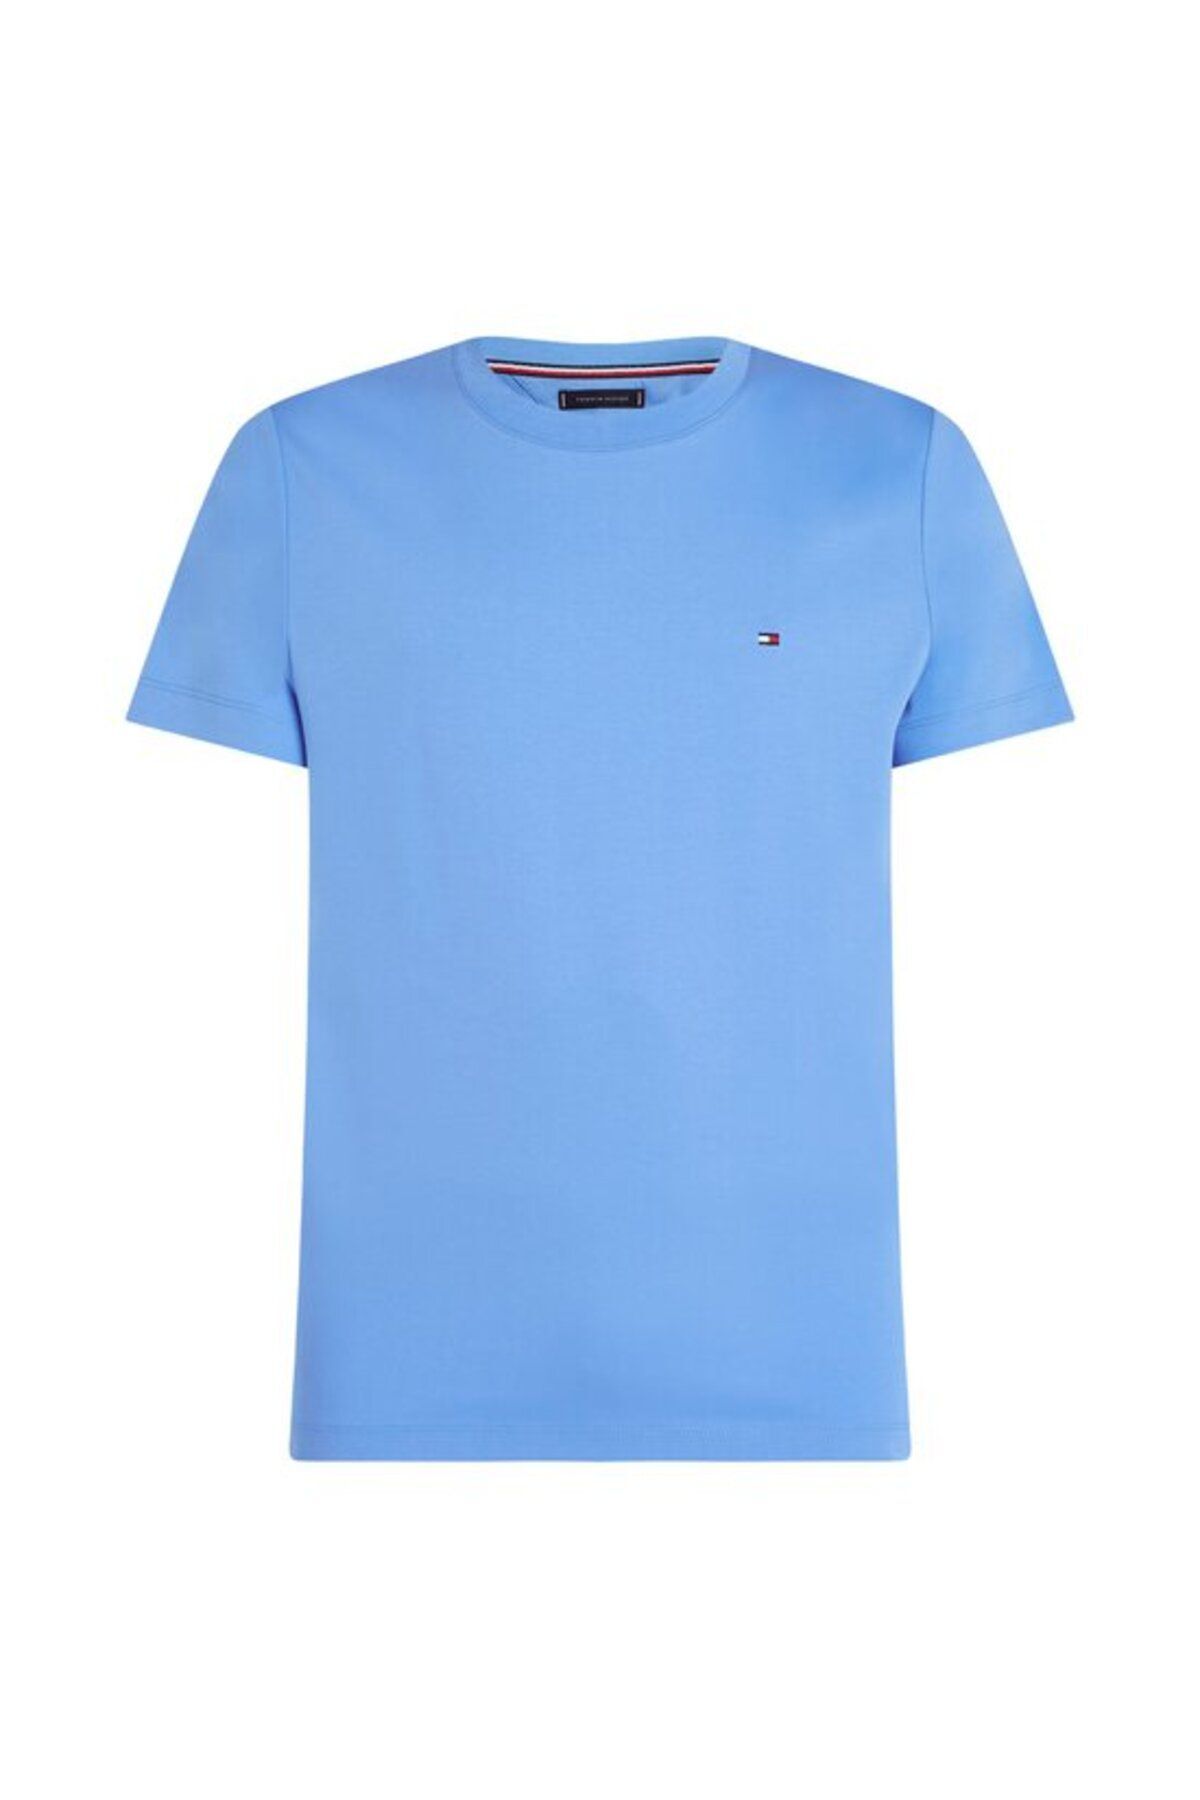 Tommy Hilfiger Erkek Marka Logolu Pamuklu Günlük Kullanım Mavi1 T-Shirt MW0MW33202-C30